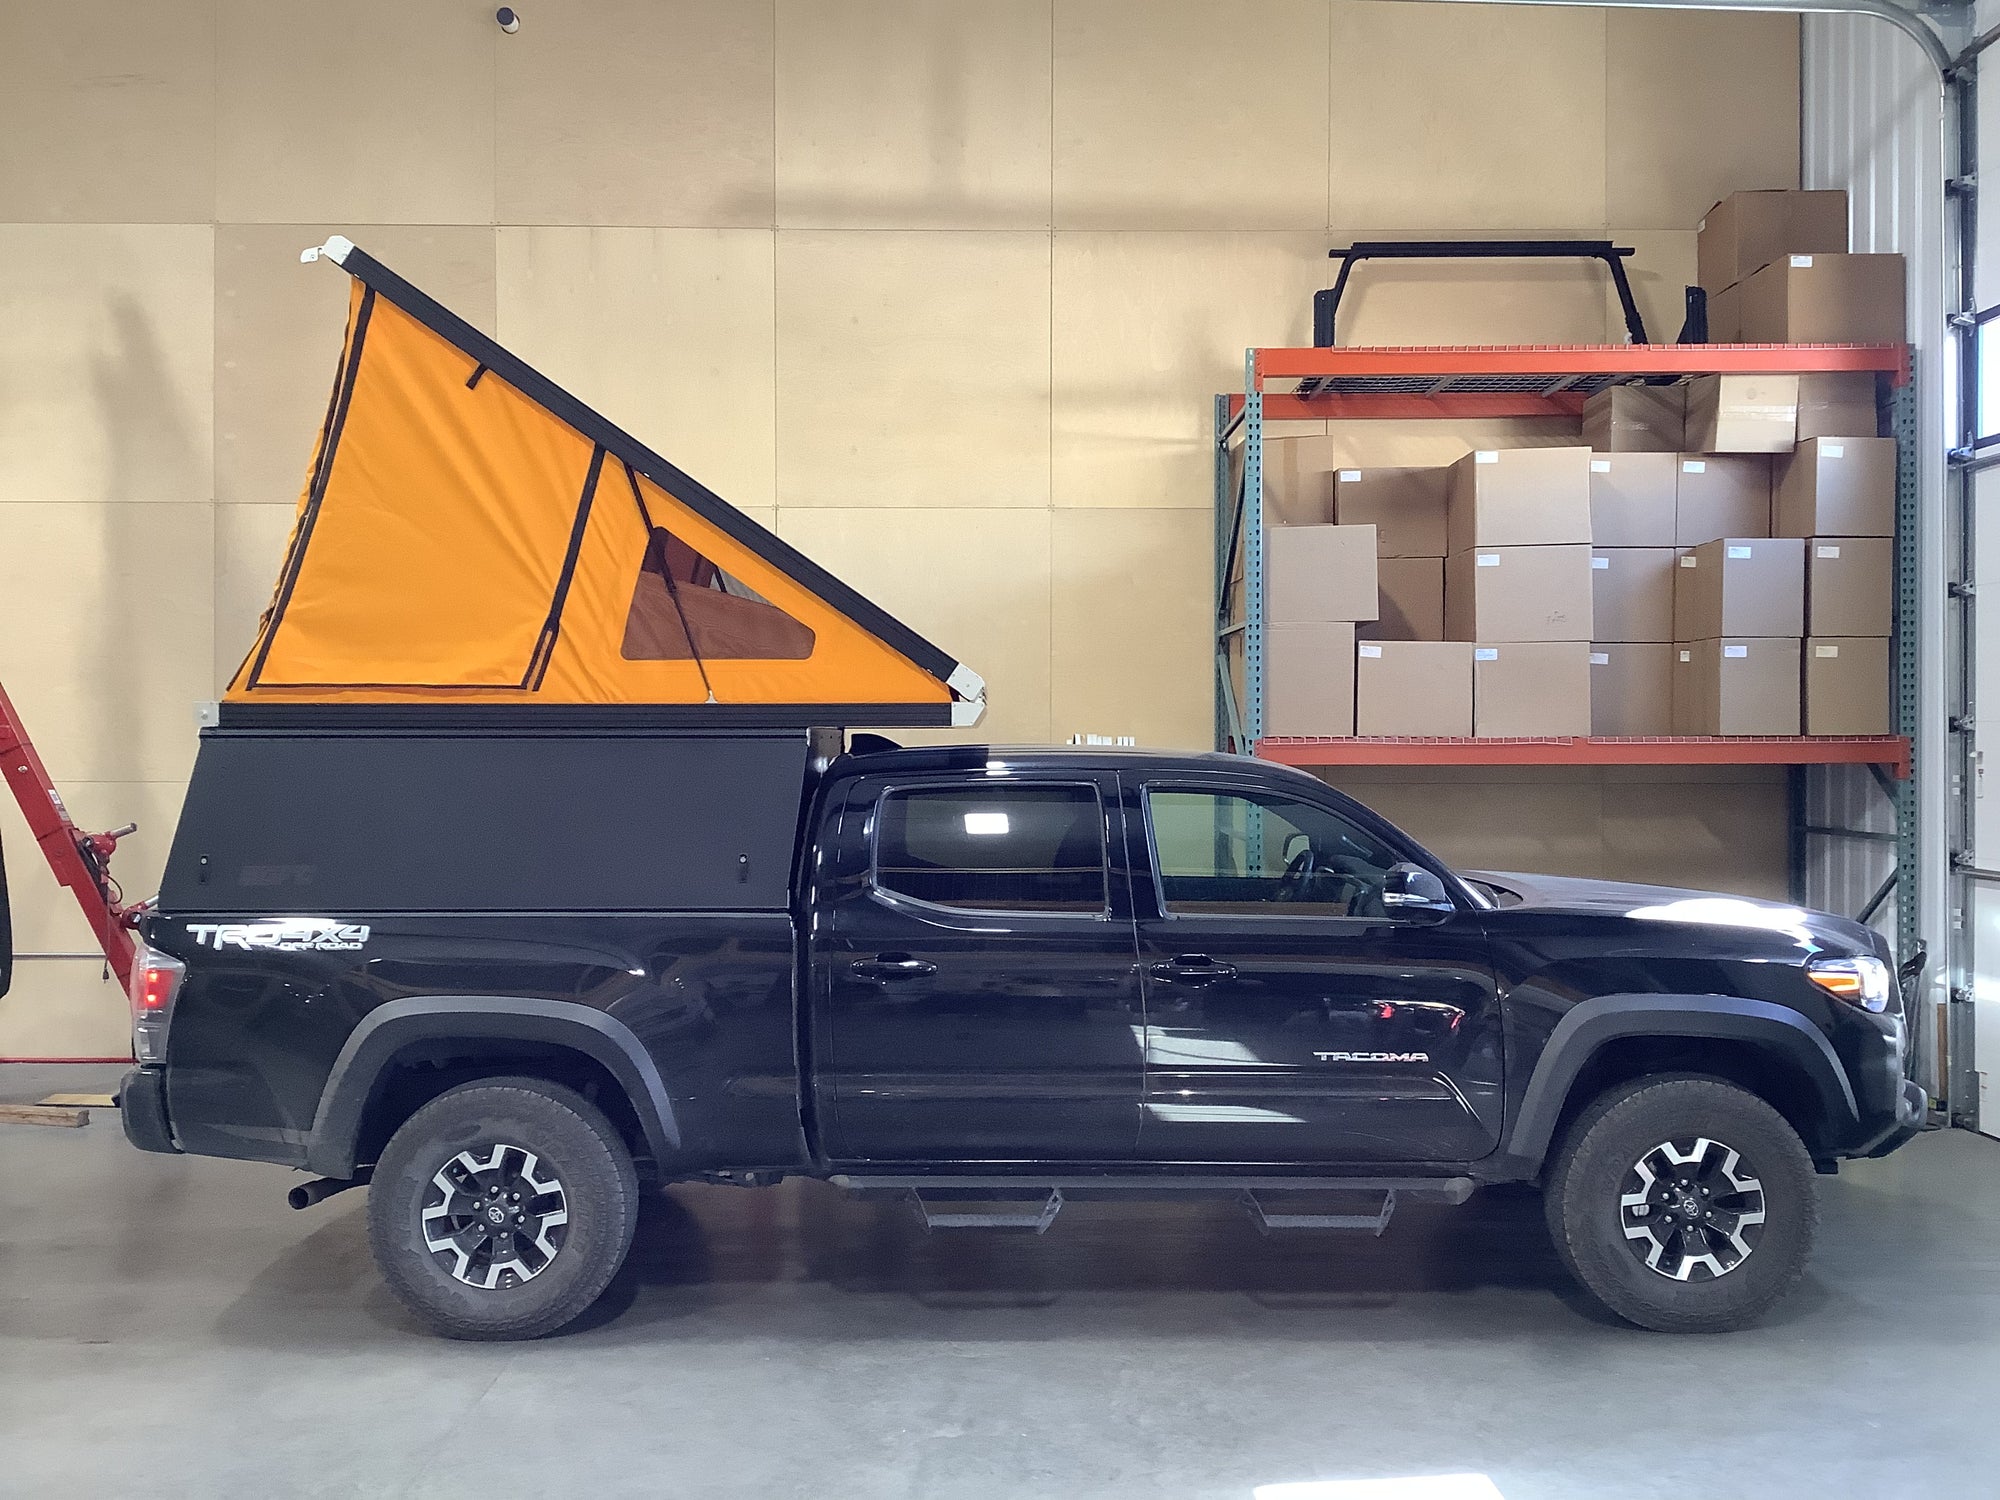 2022 Toyota Tacoma Camper - Build #3675